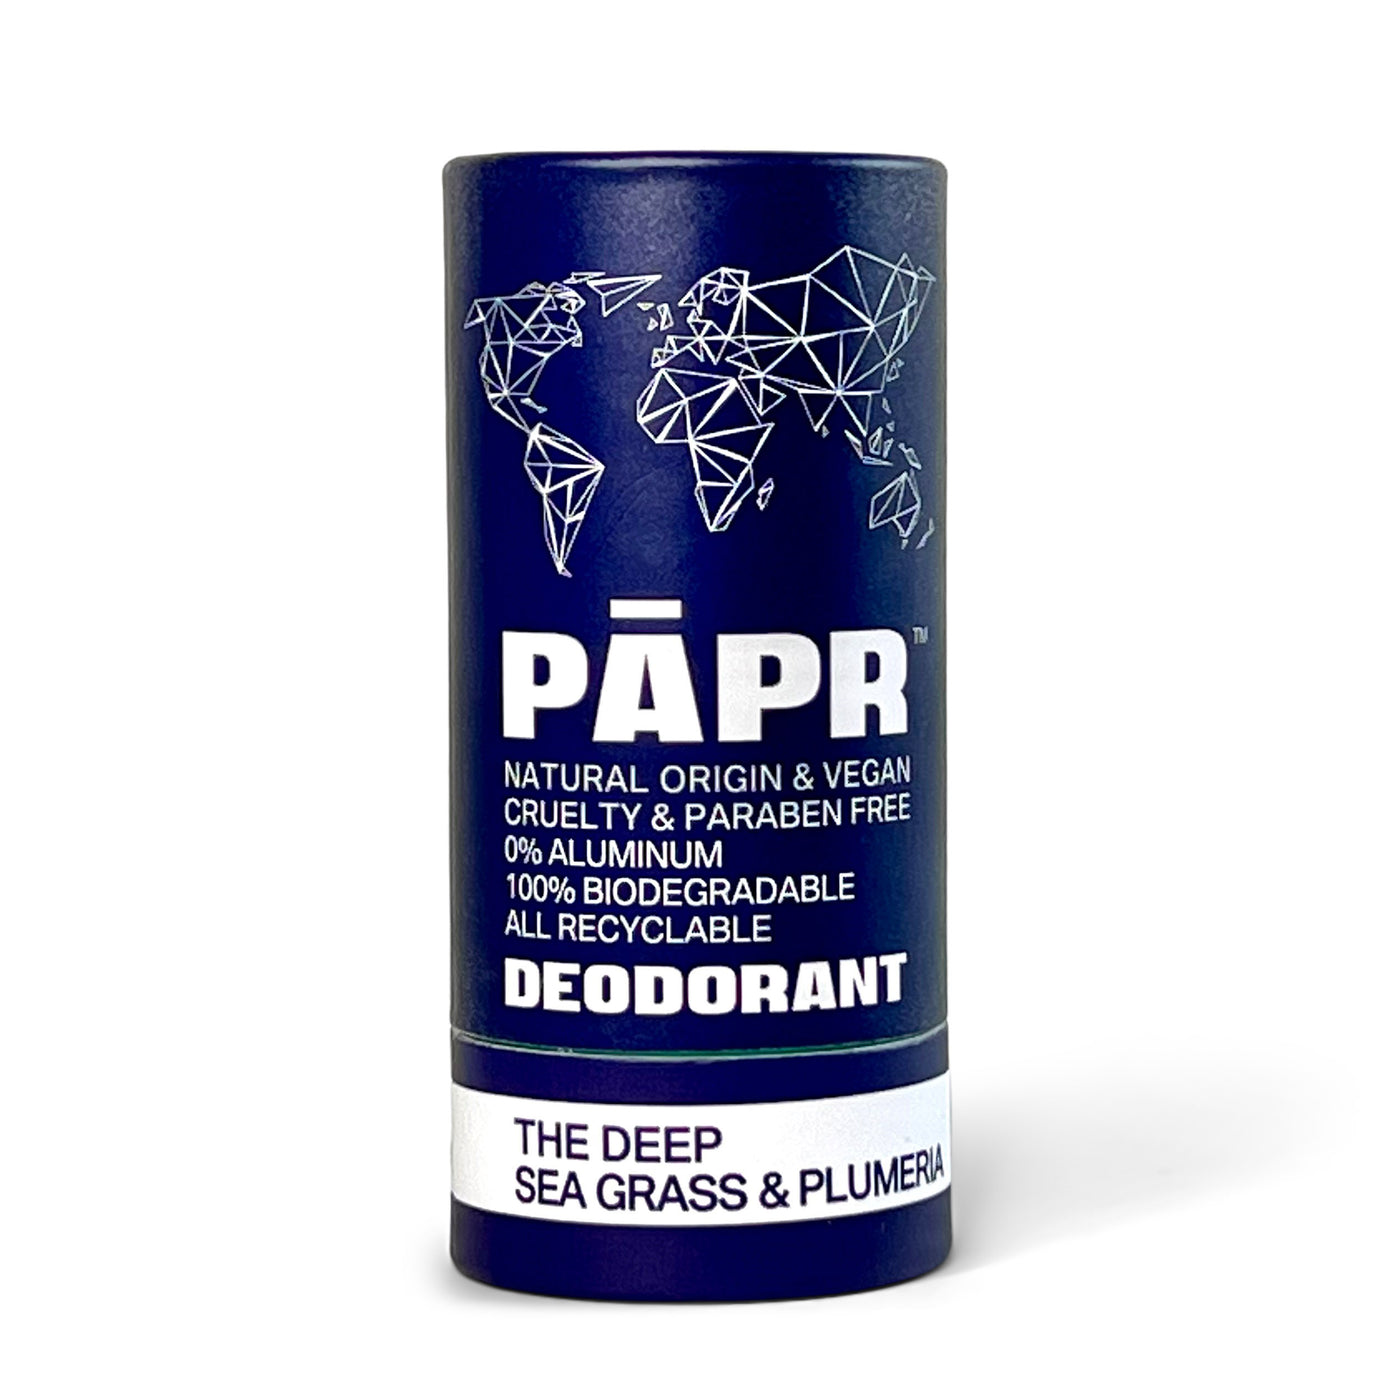 PAPR Deodorant: The Deep, Sea Grass & Plumeria, 2.65 oz.